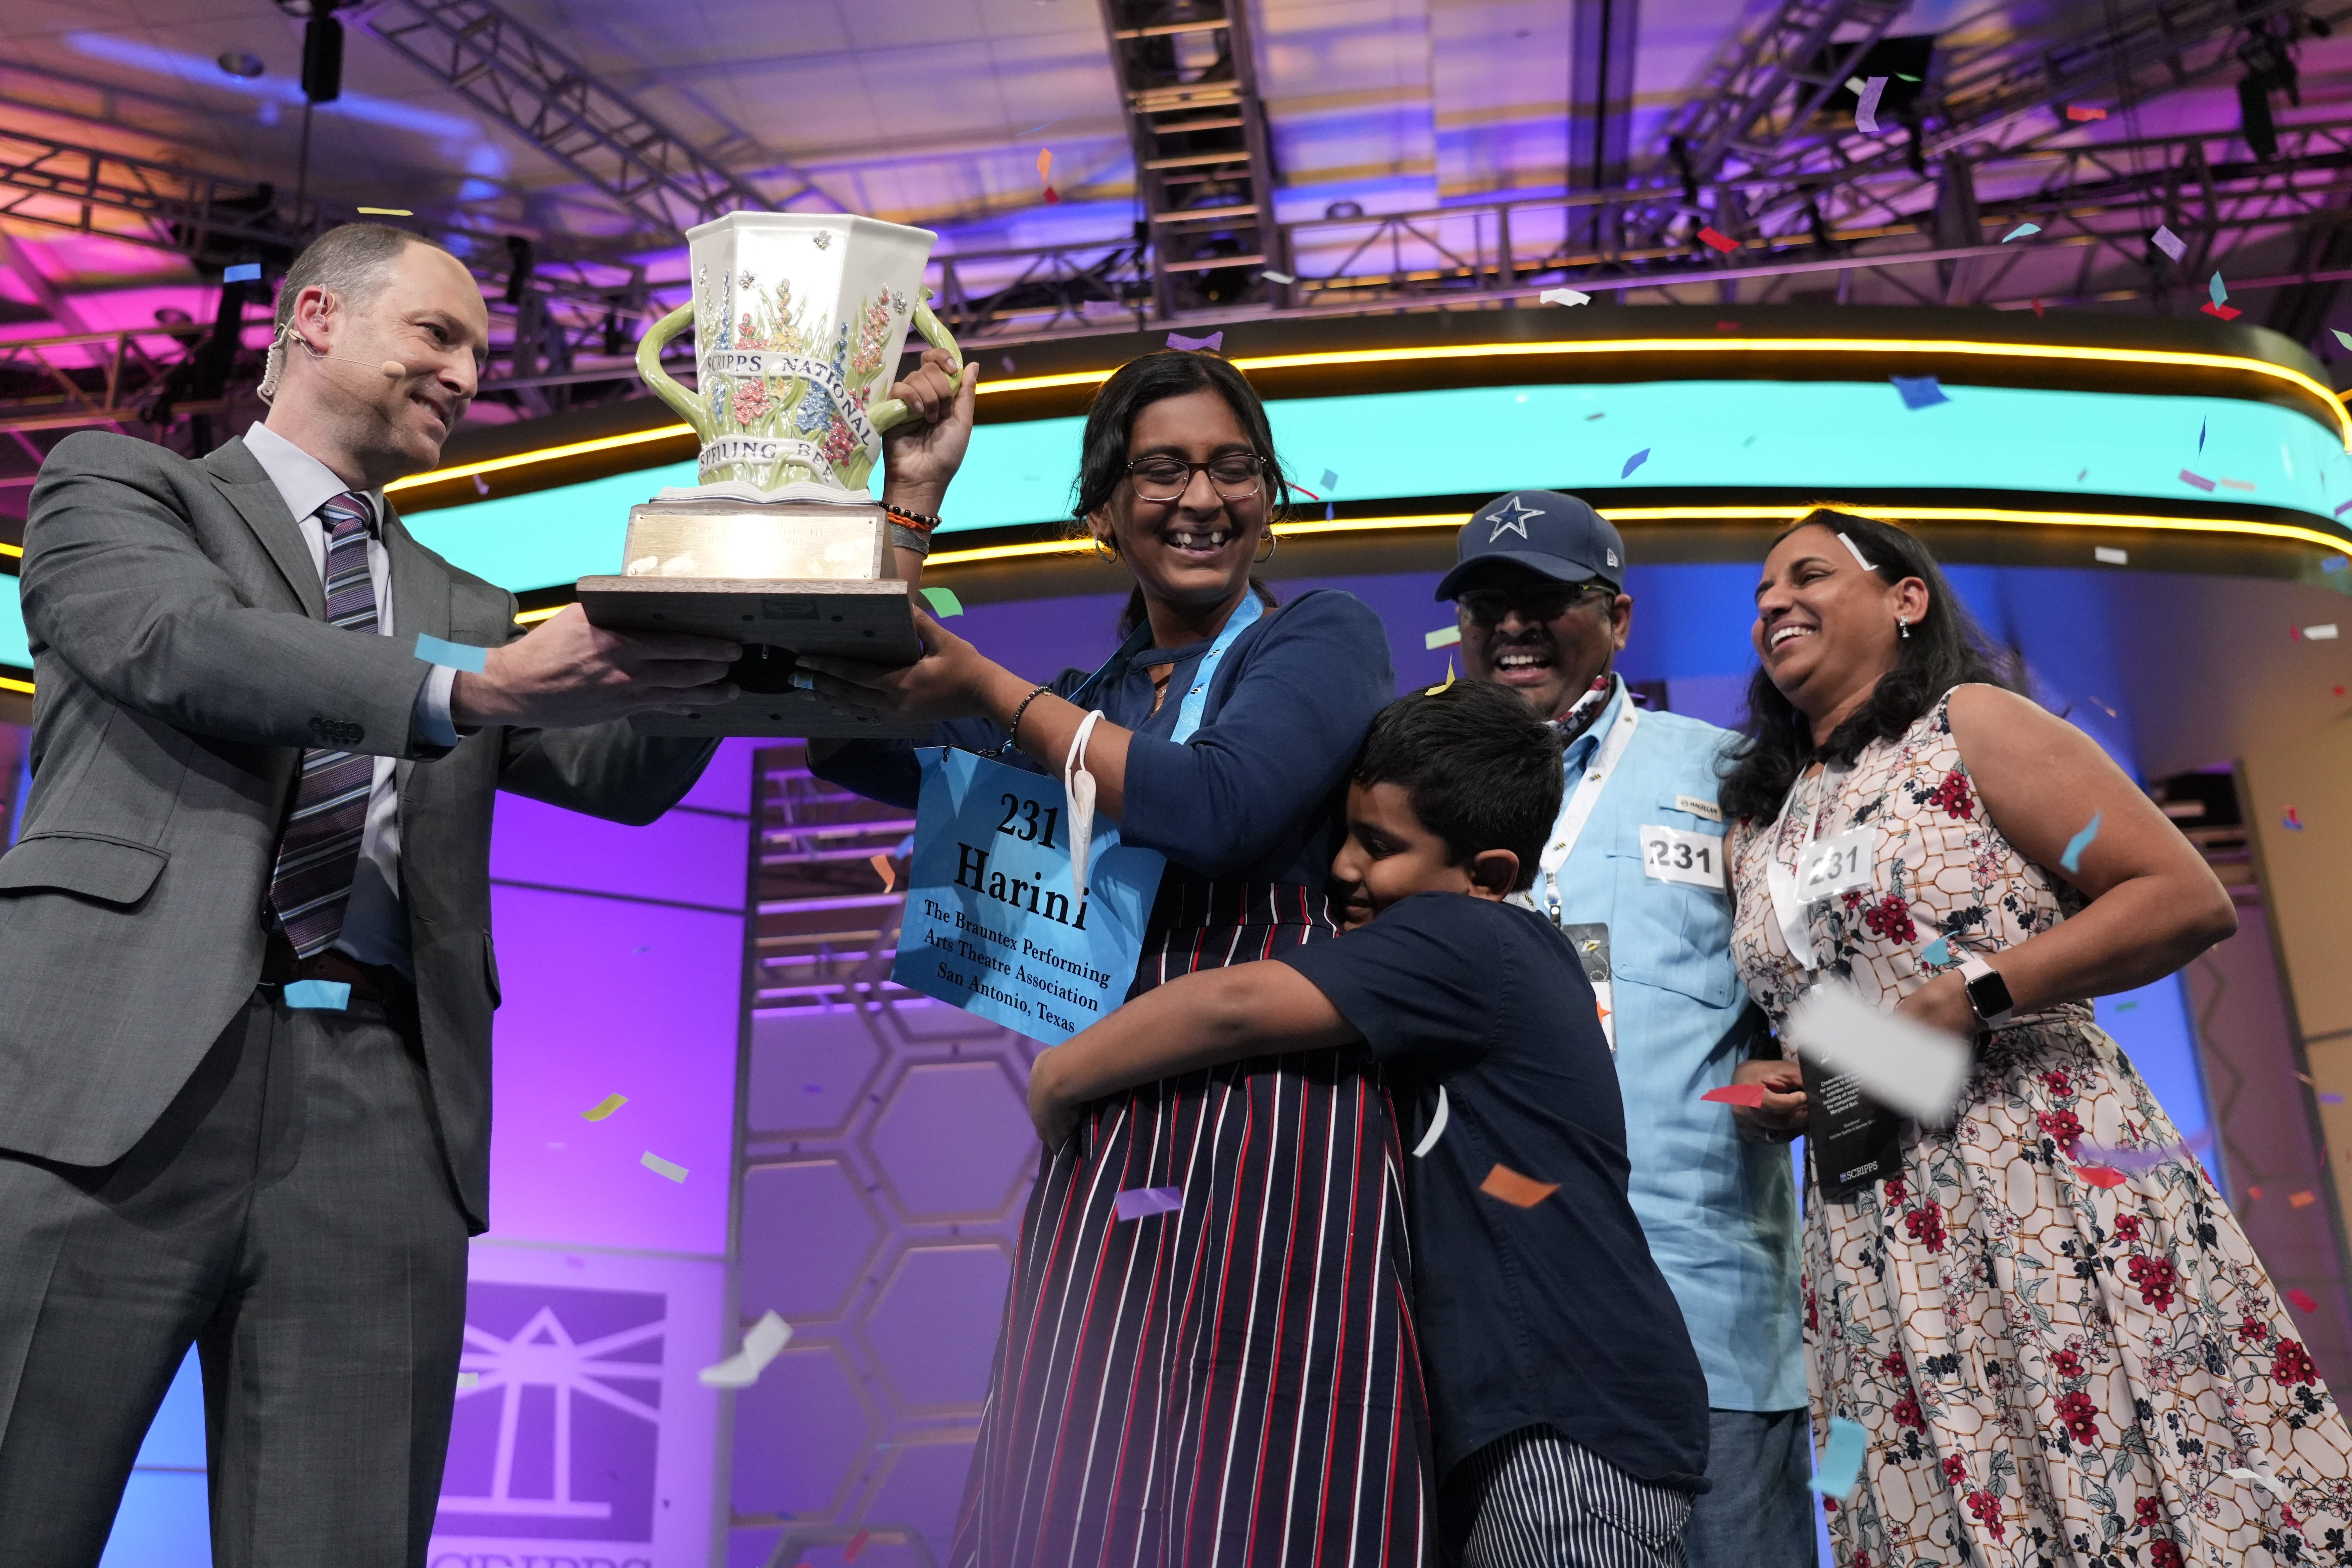 National Spelling Bee 2022: Harini Logan wins in spell-off